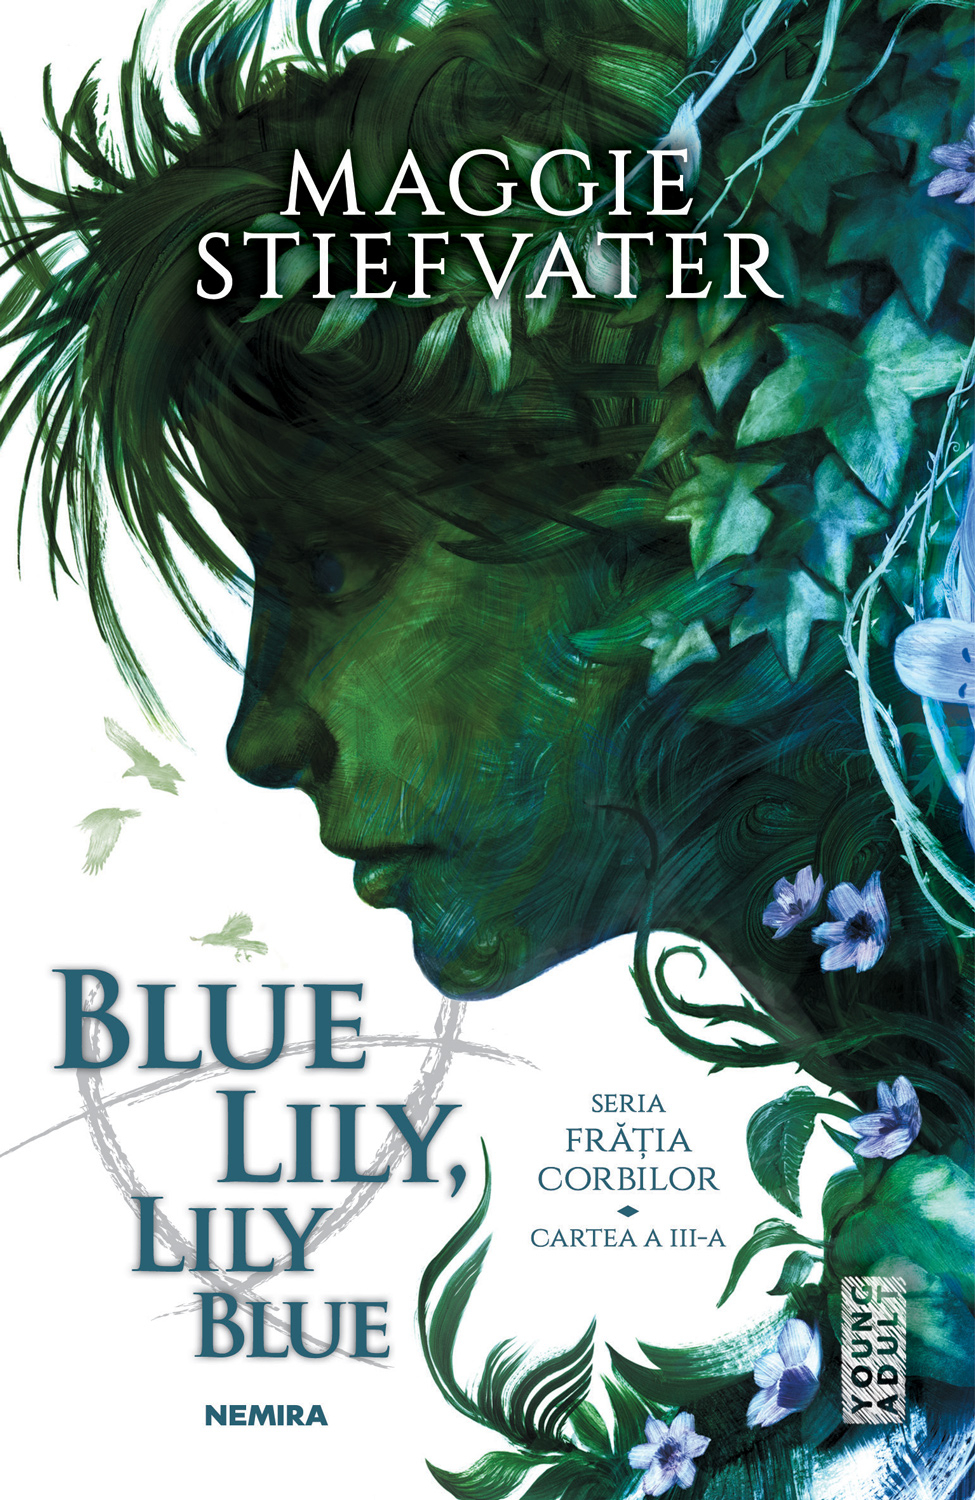 eBook Blue Lily, Lily Blue. Seria Fratia Corbilor. Vol.3 - Maggie Stiefvater